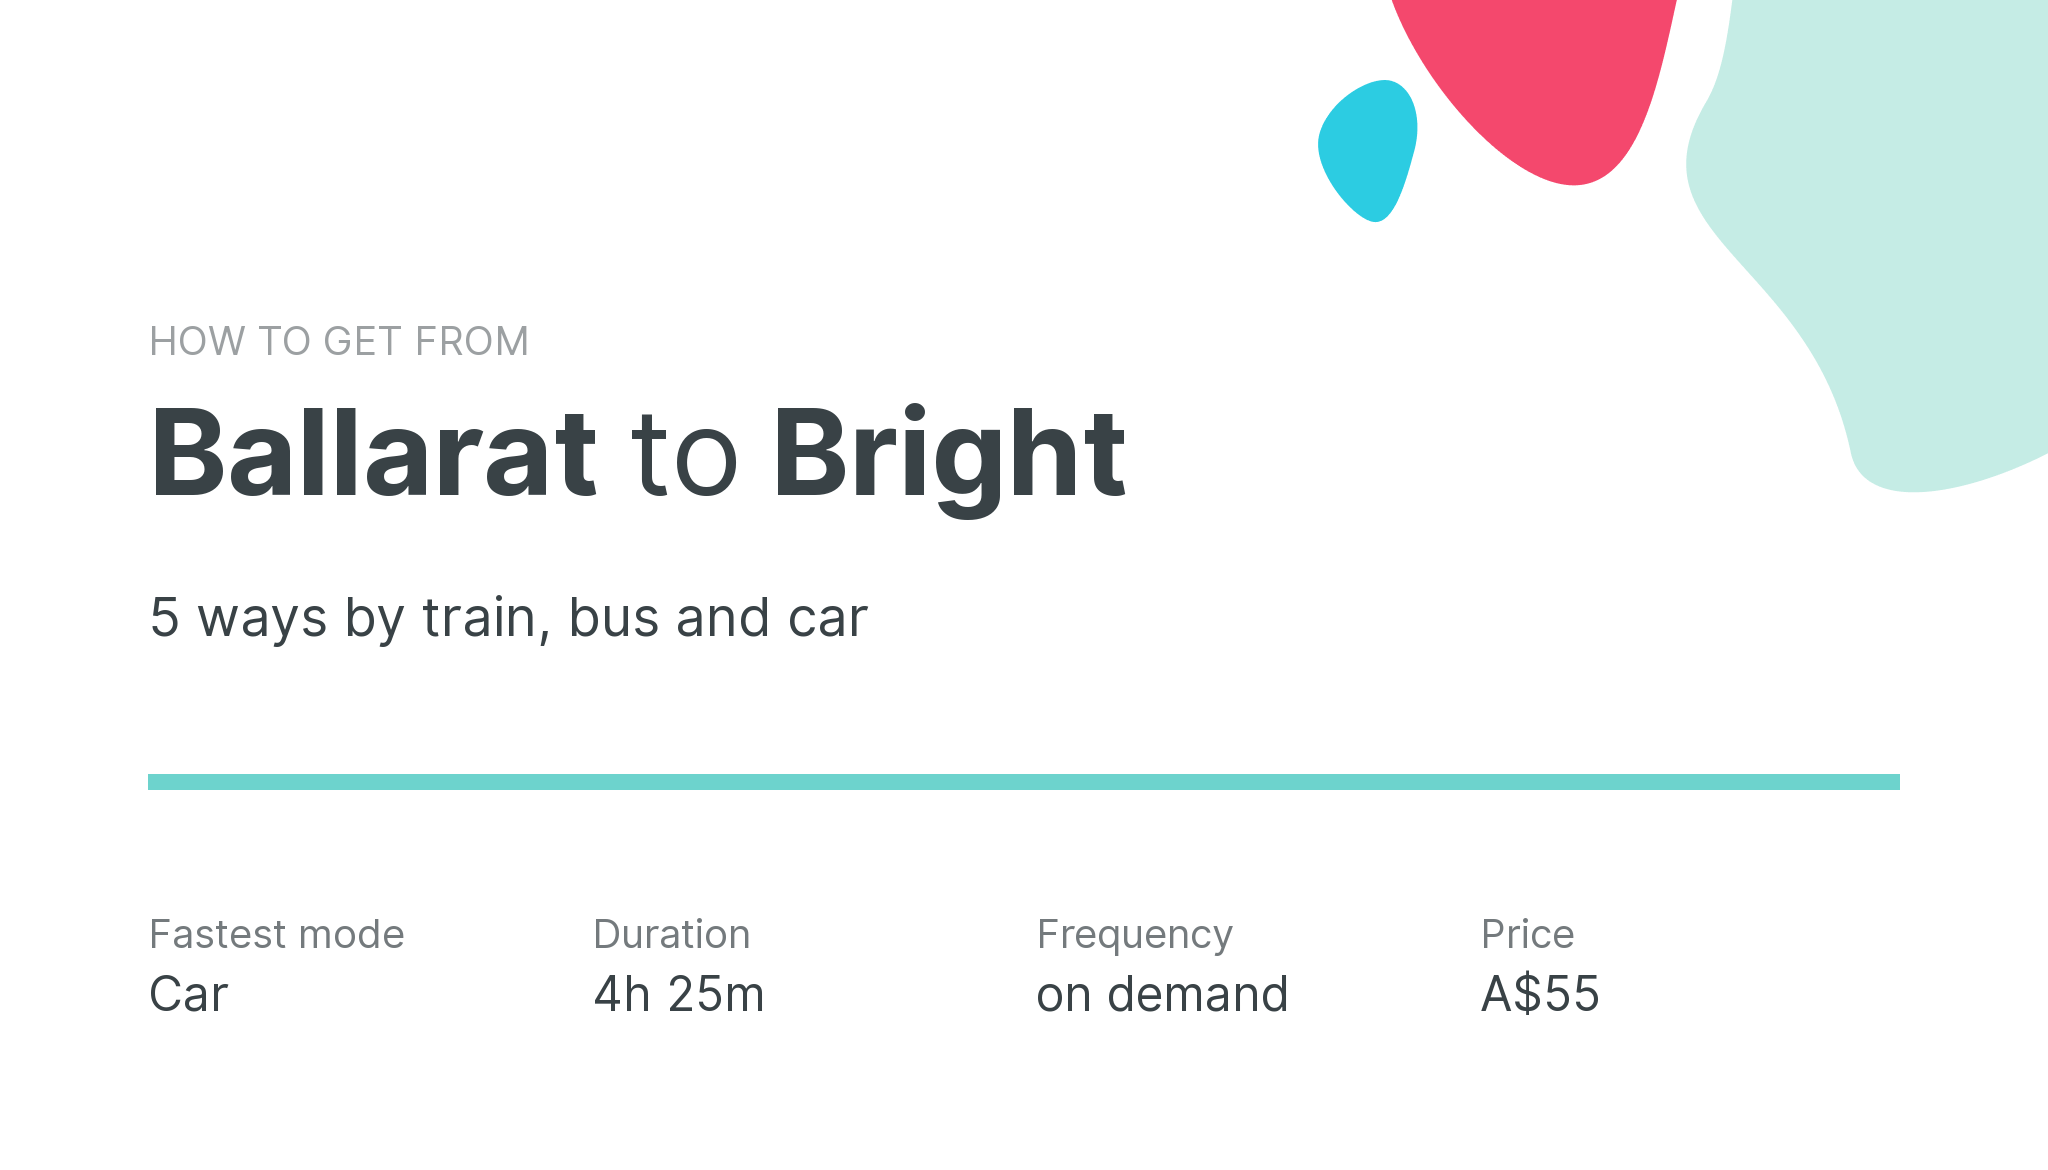 How do I get from Ballarat to Bright